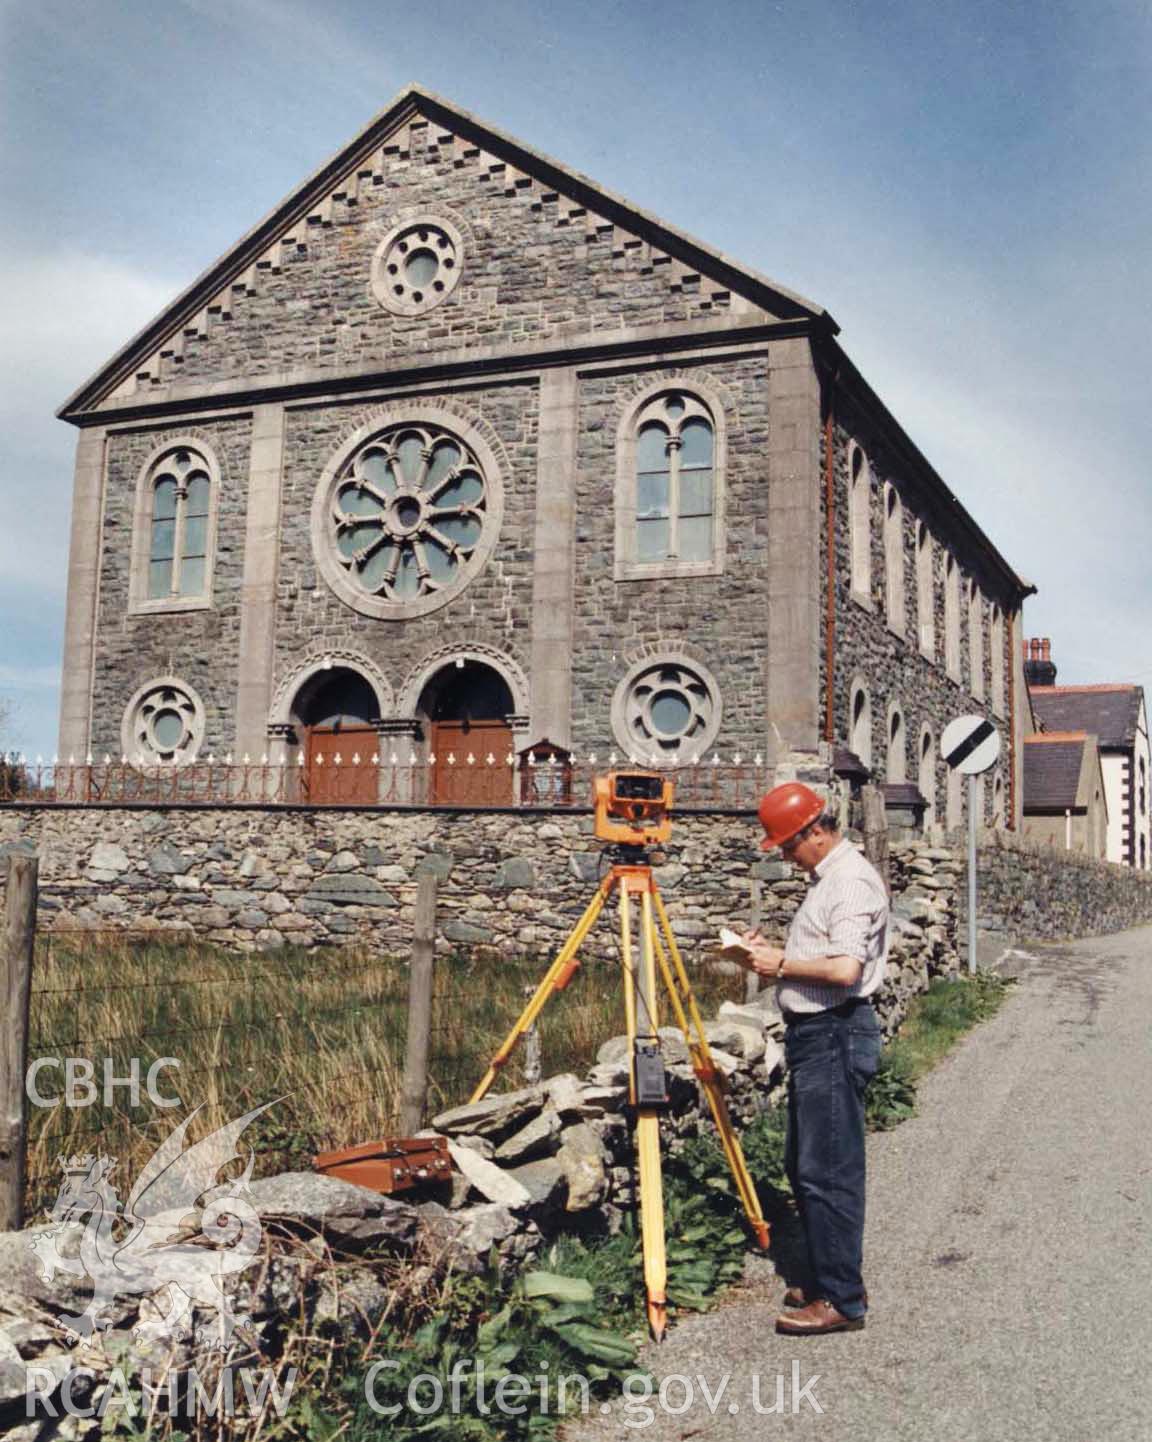 Digital copy of an undated photograph of Cefn y Waun Chapel taken by D.J. Percival.